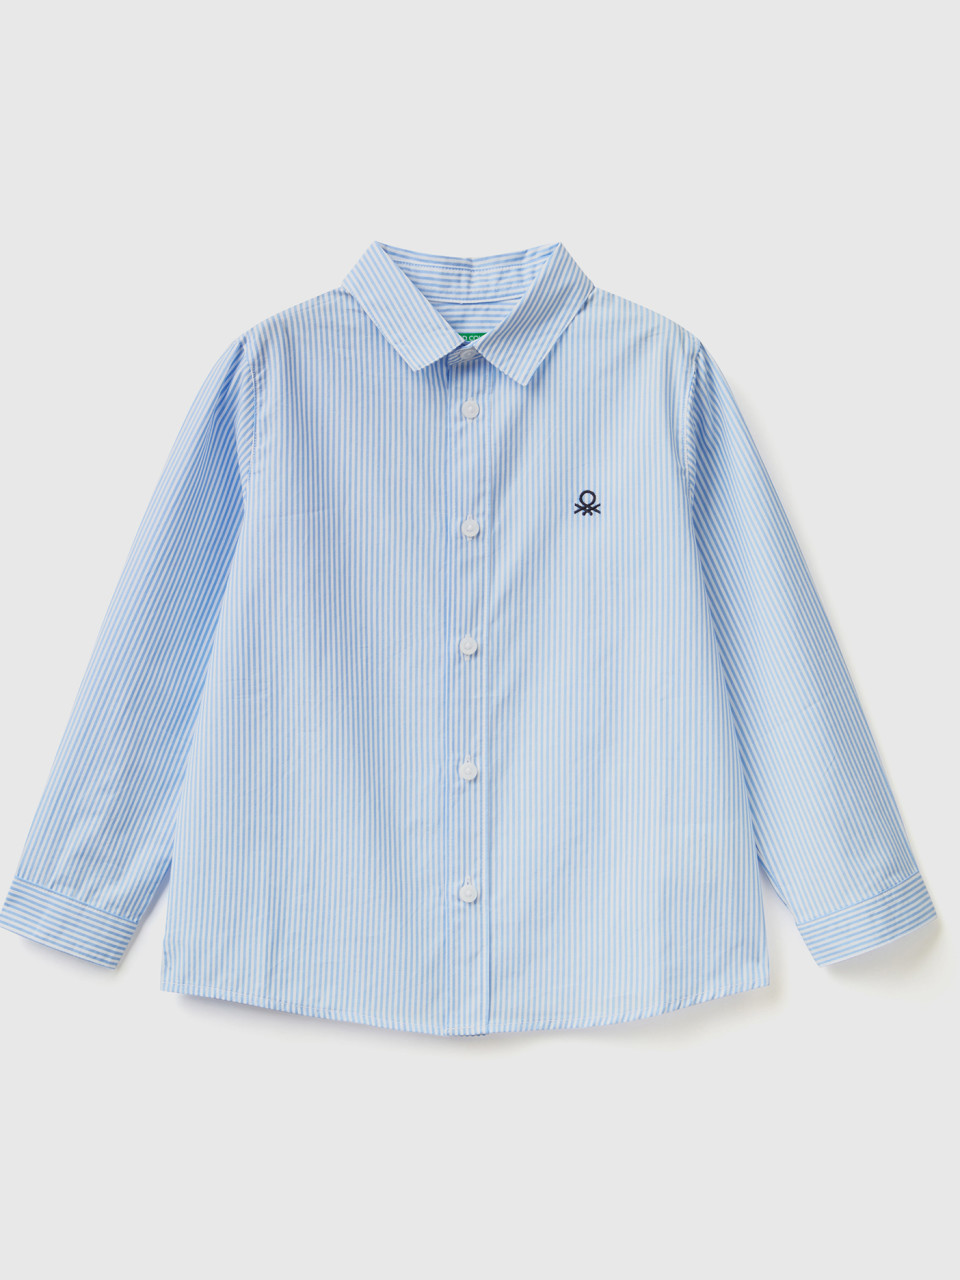 Benetton, Shirt In Pure Cotton, Sky Blue, Kids